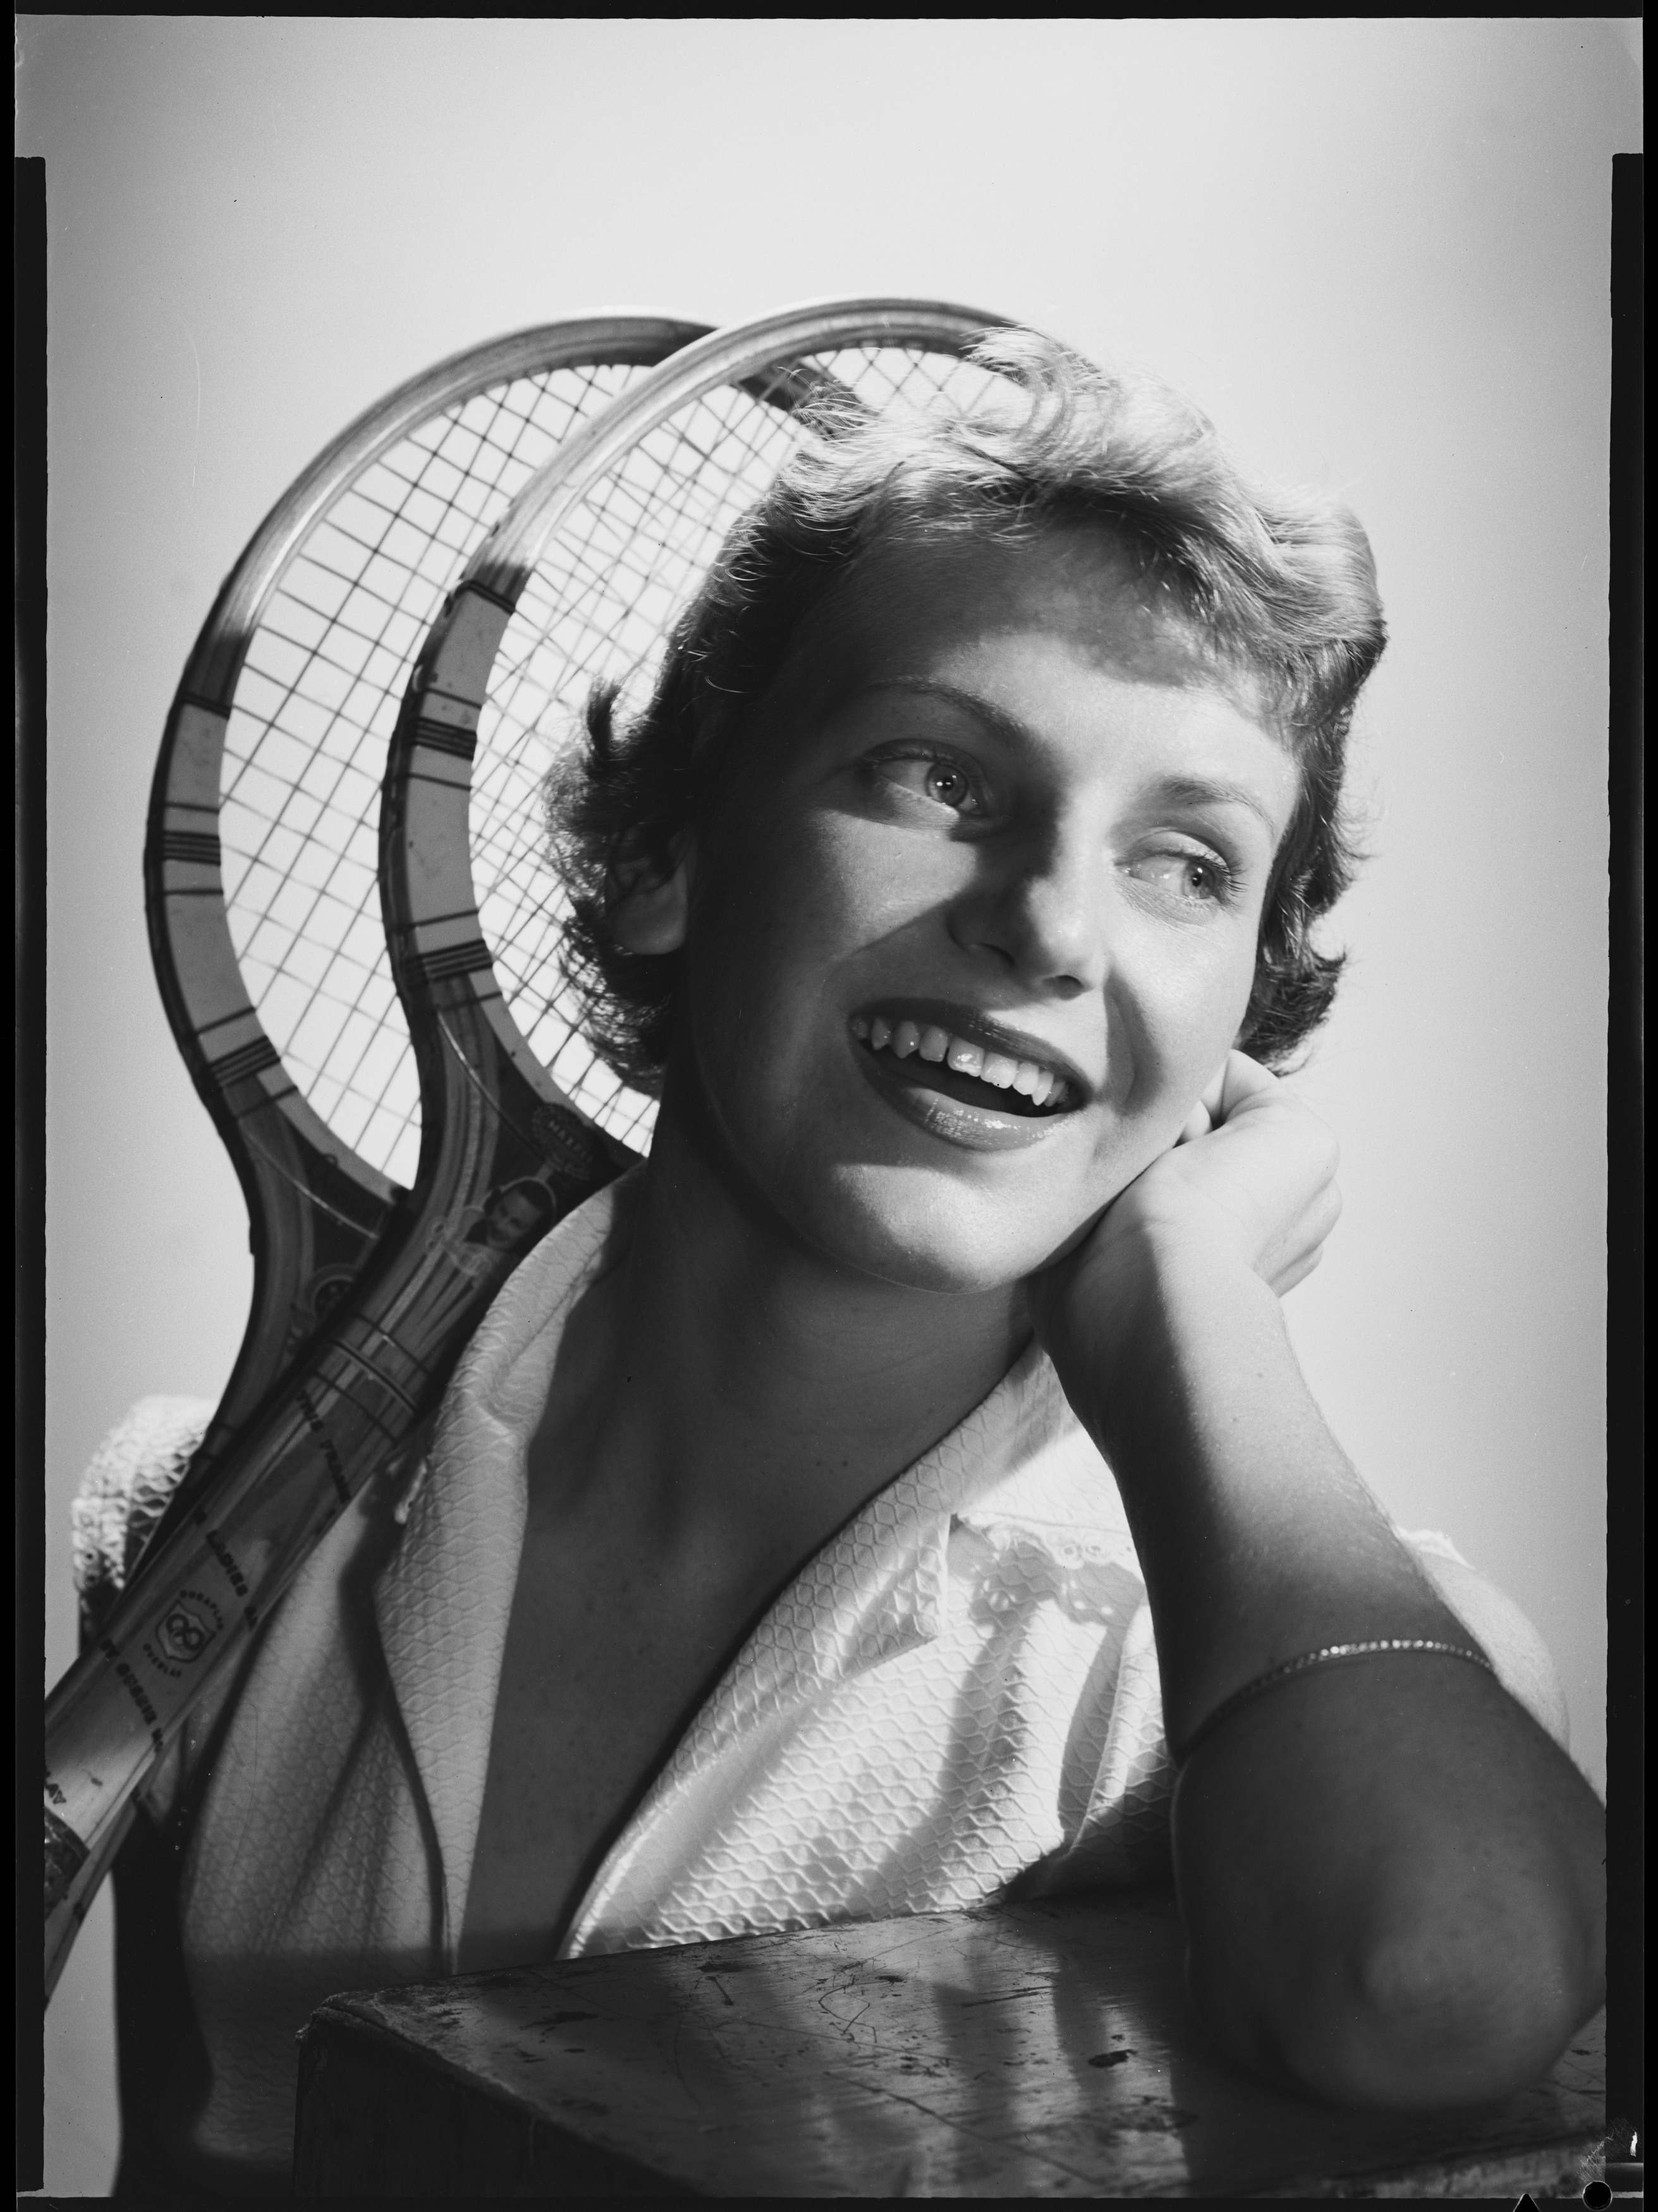 Australian Tennis magazine cover shot, March 1953, by Max Dupain & Associates